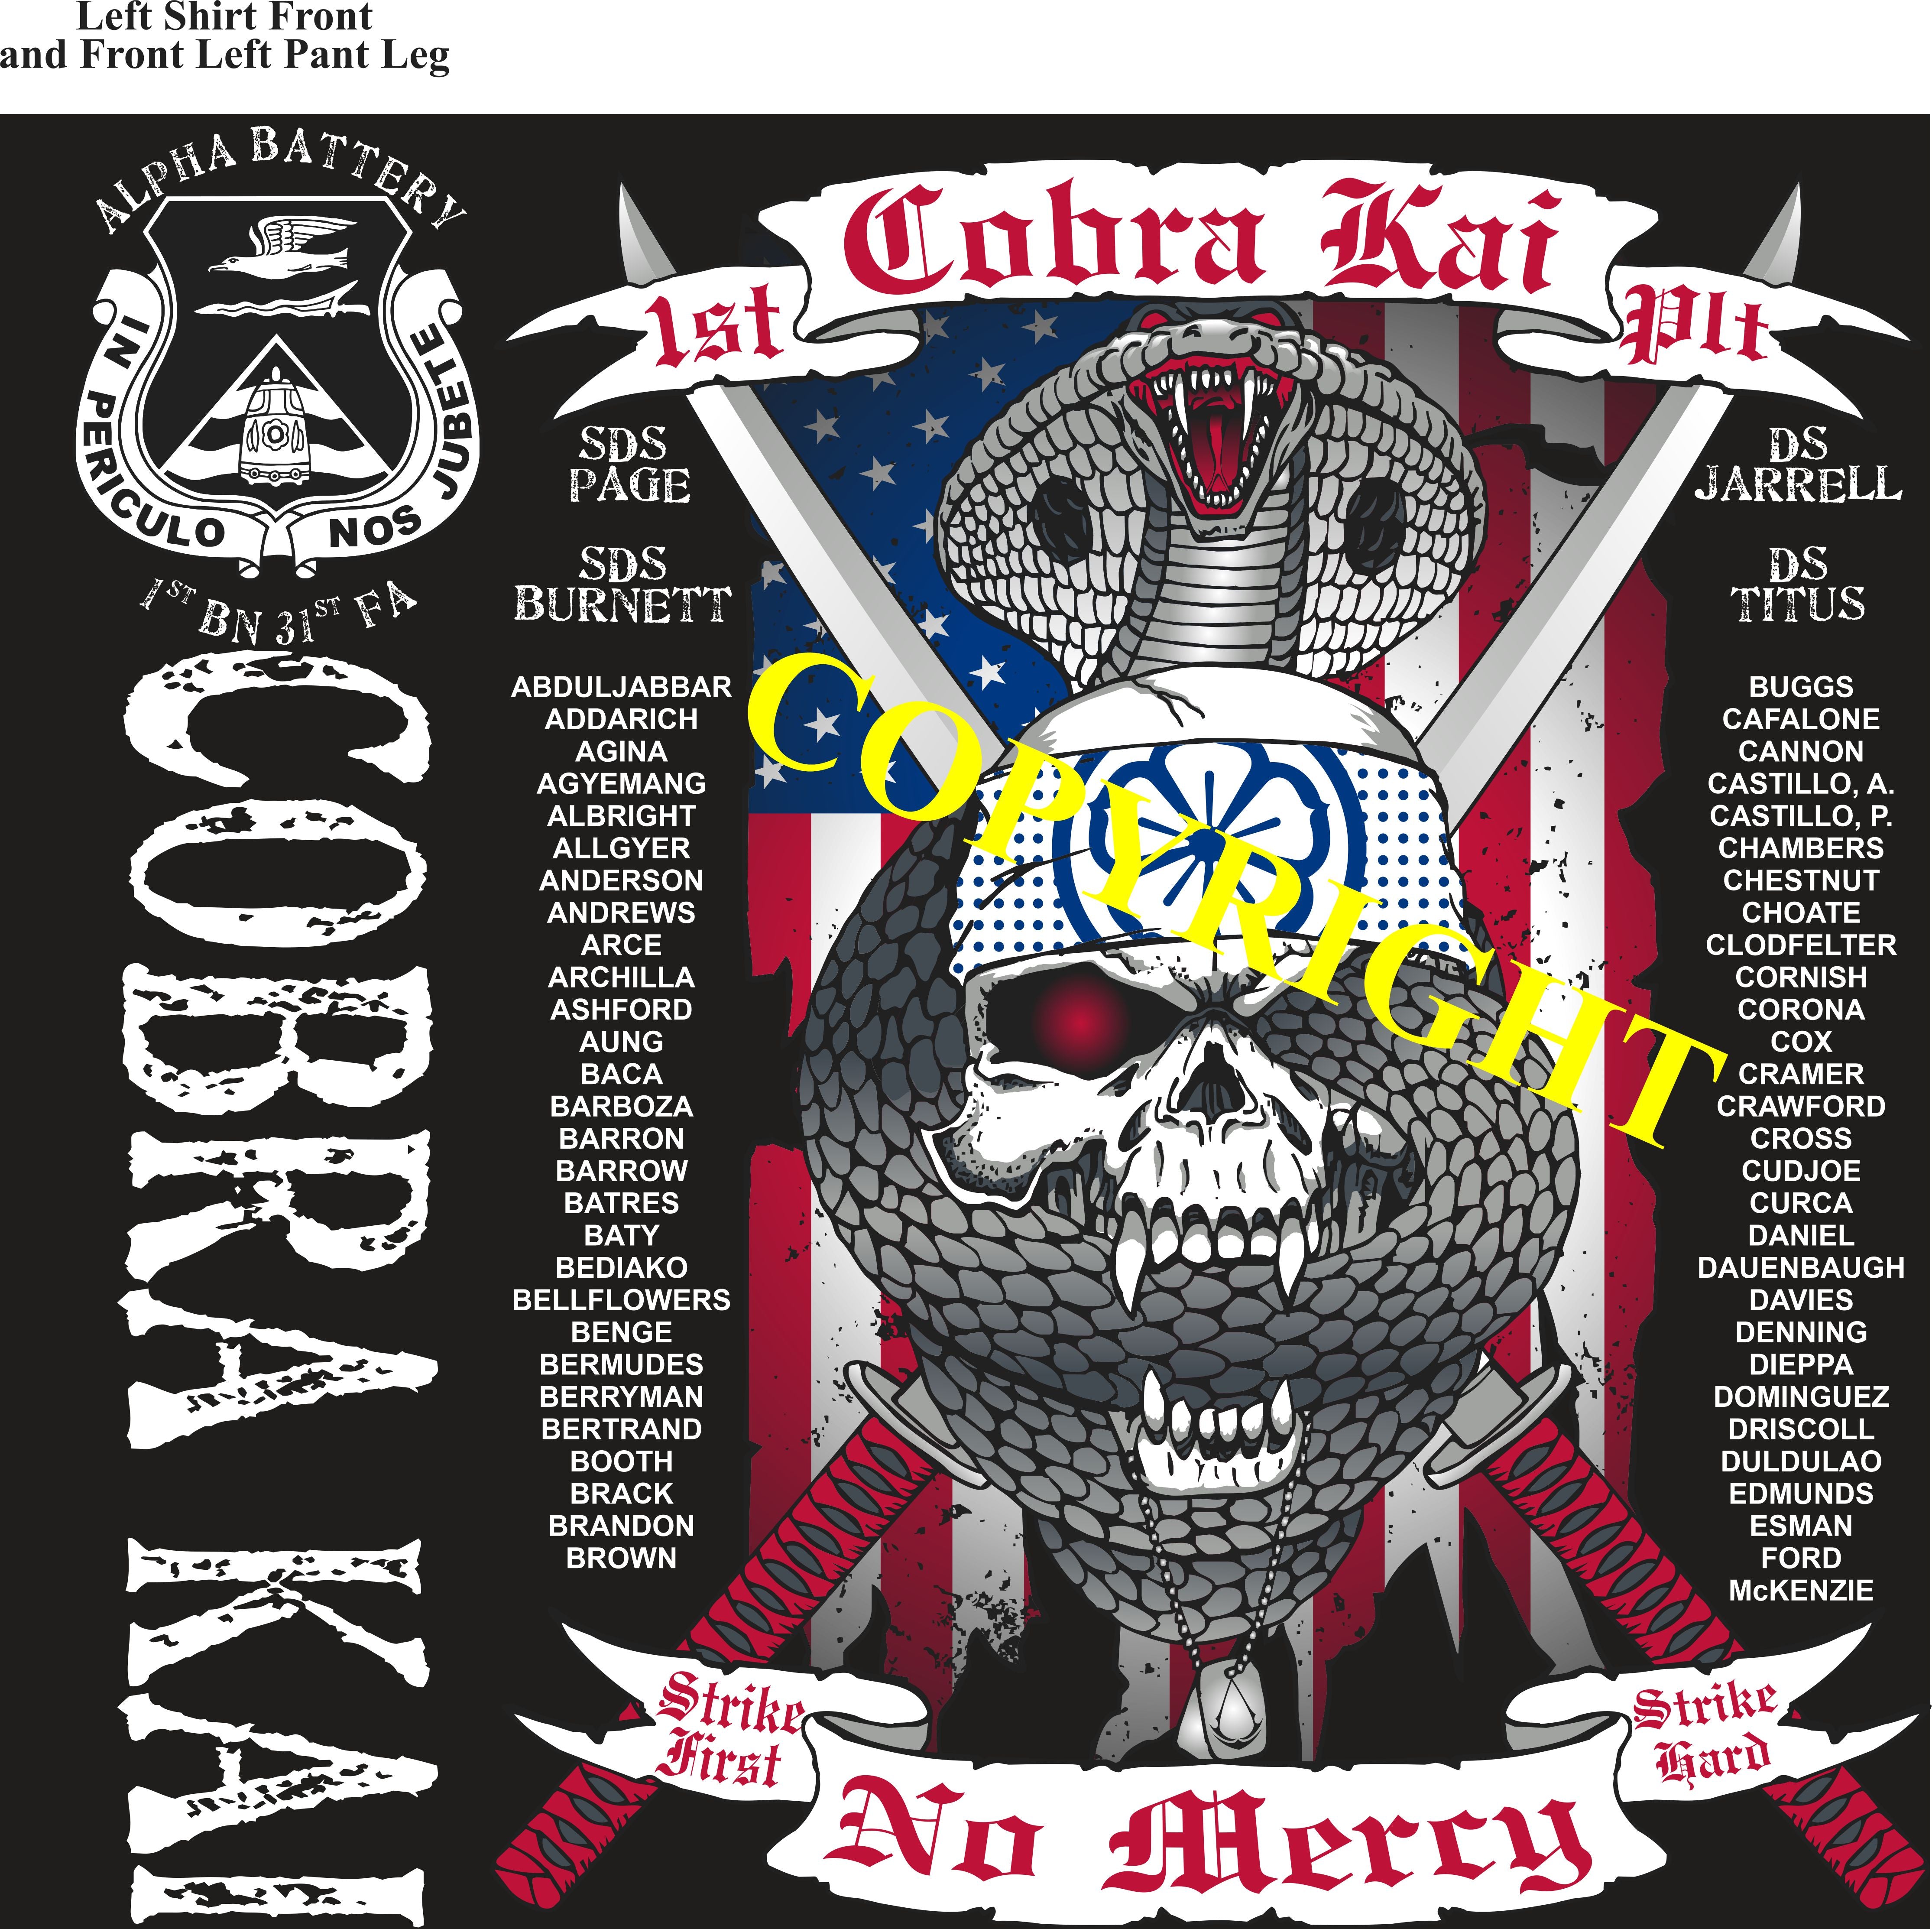 Platoon Shirts (2nd generation print) ALPHA 1st 31st COBRA KAI NOV 2020